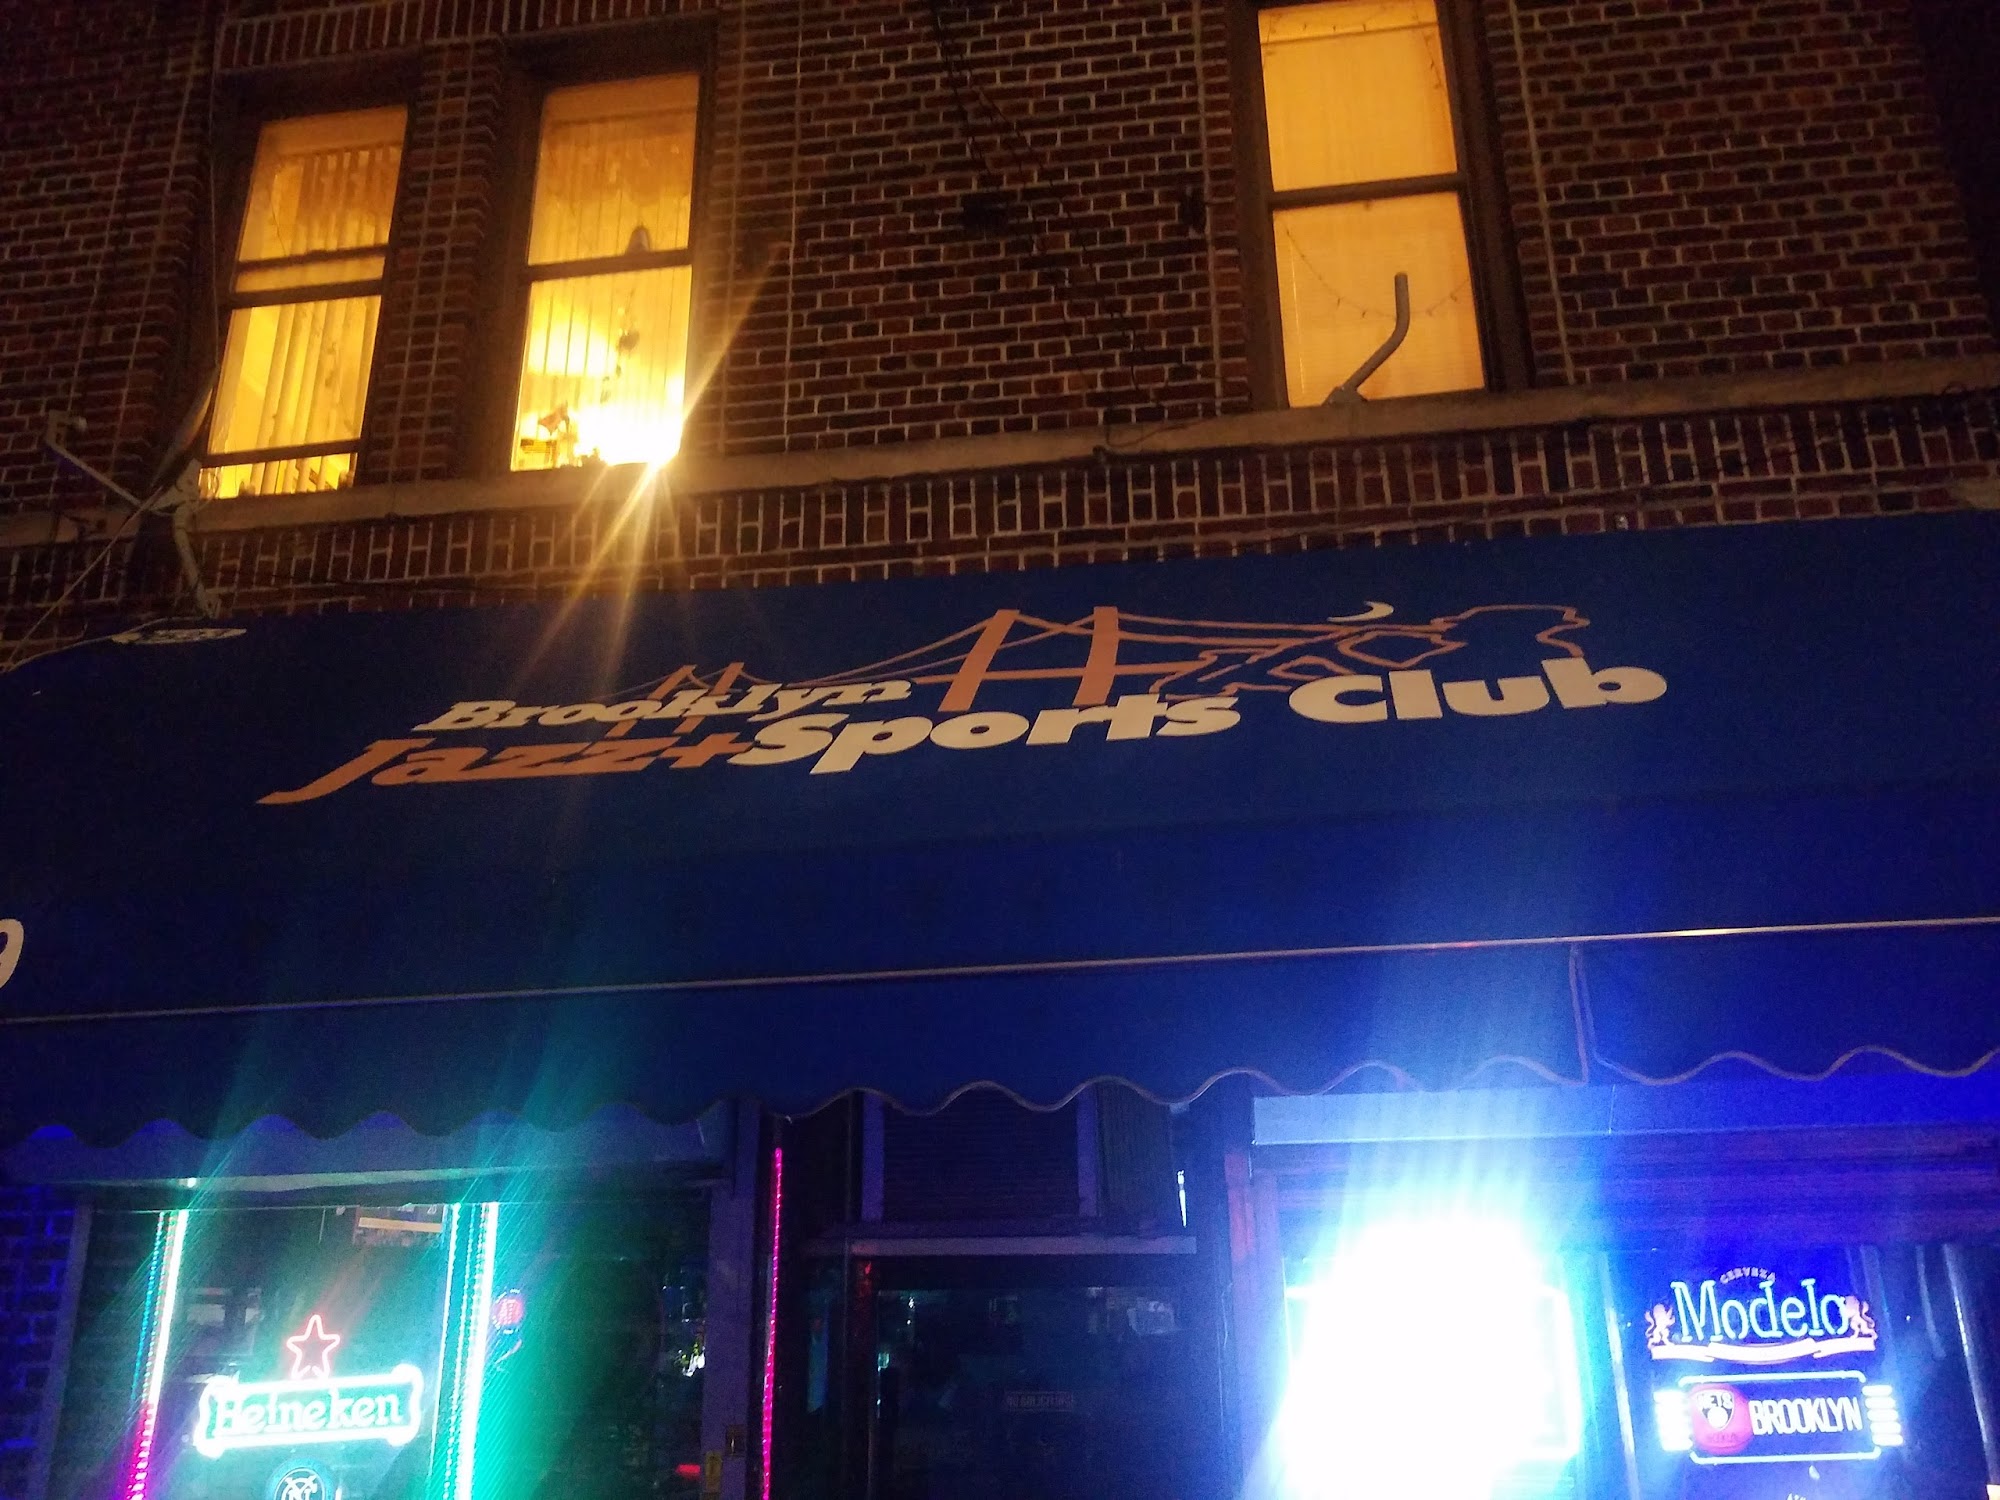 Brooklyn Jazz and sports club